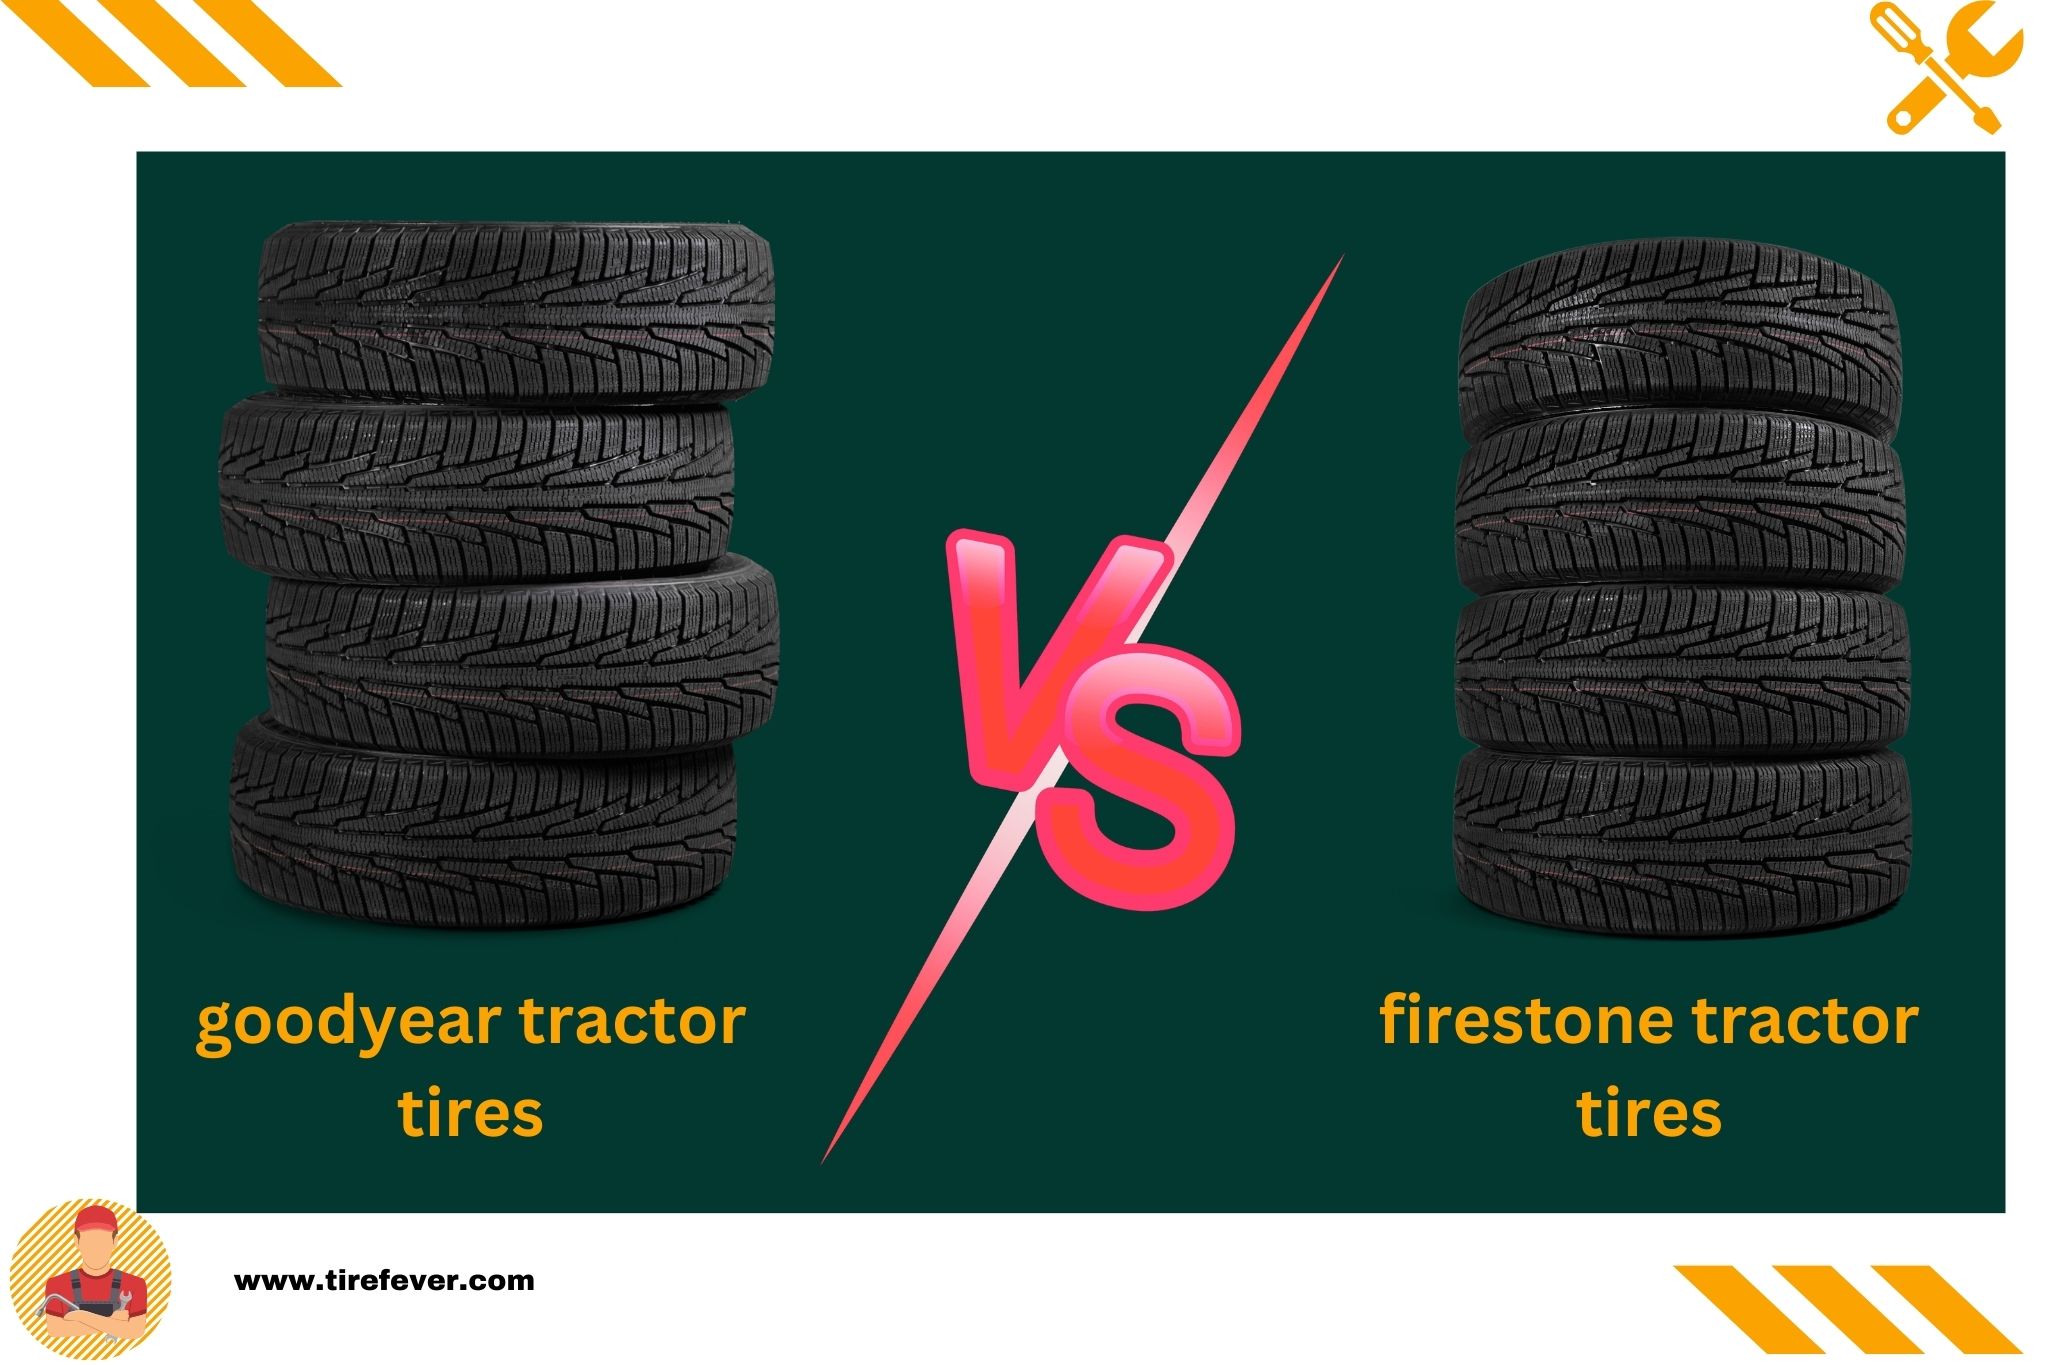 goodyear tractor tires vs firestone tractor tires